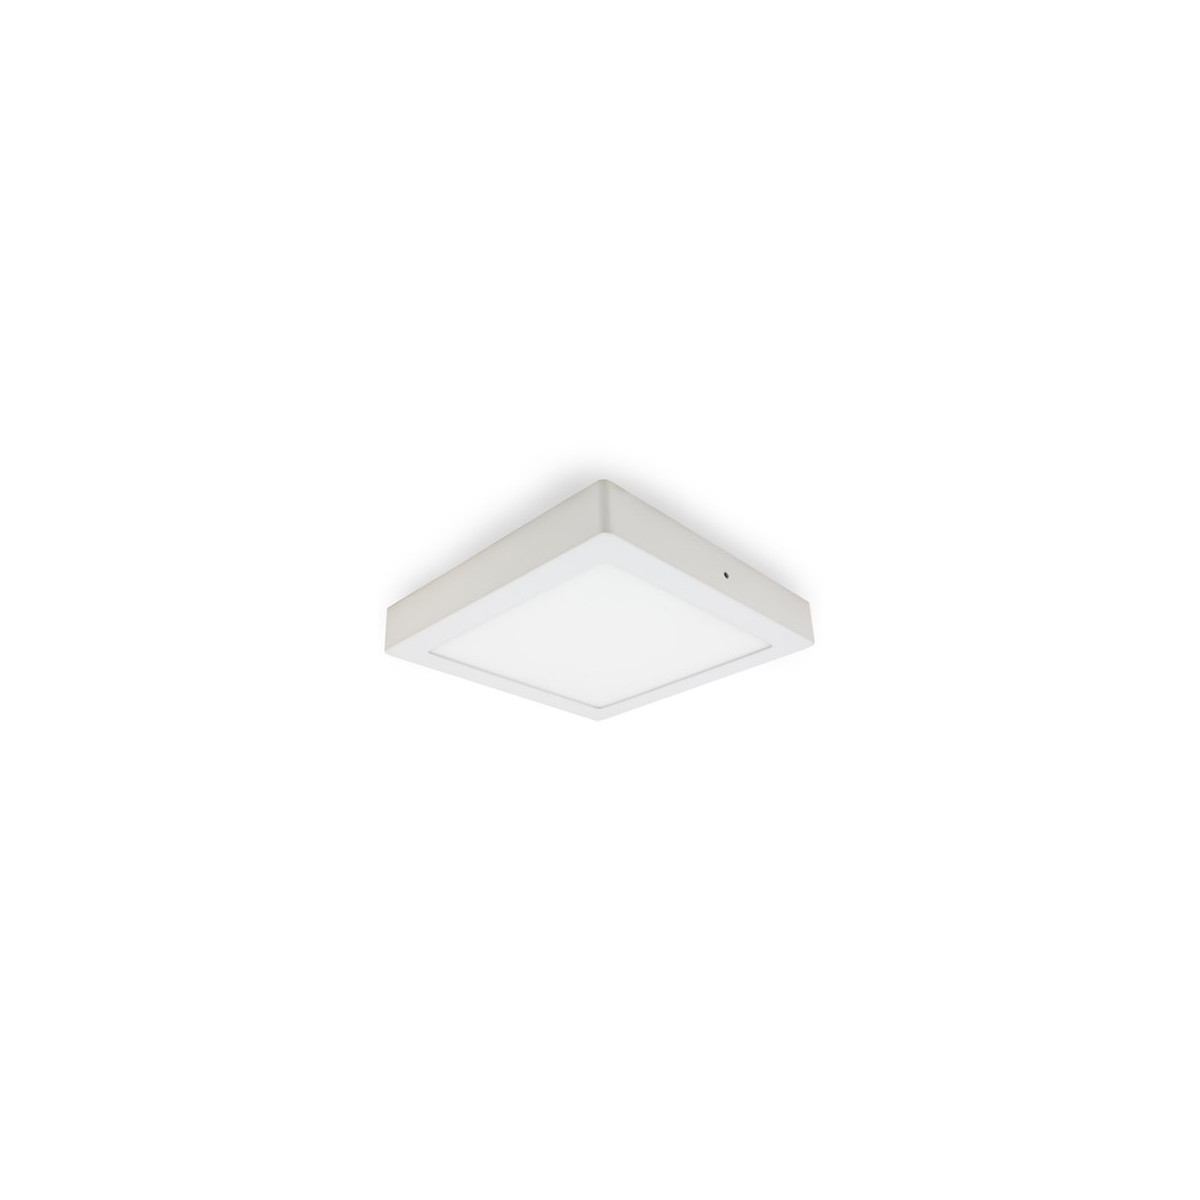 LED Ceiling Light - Square, 18W